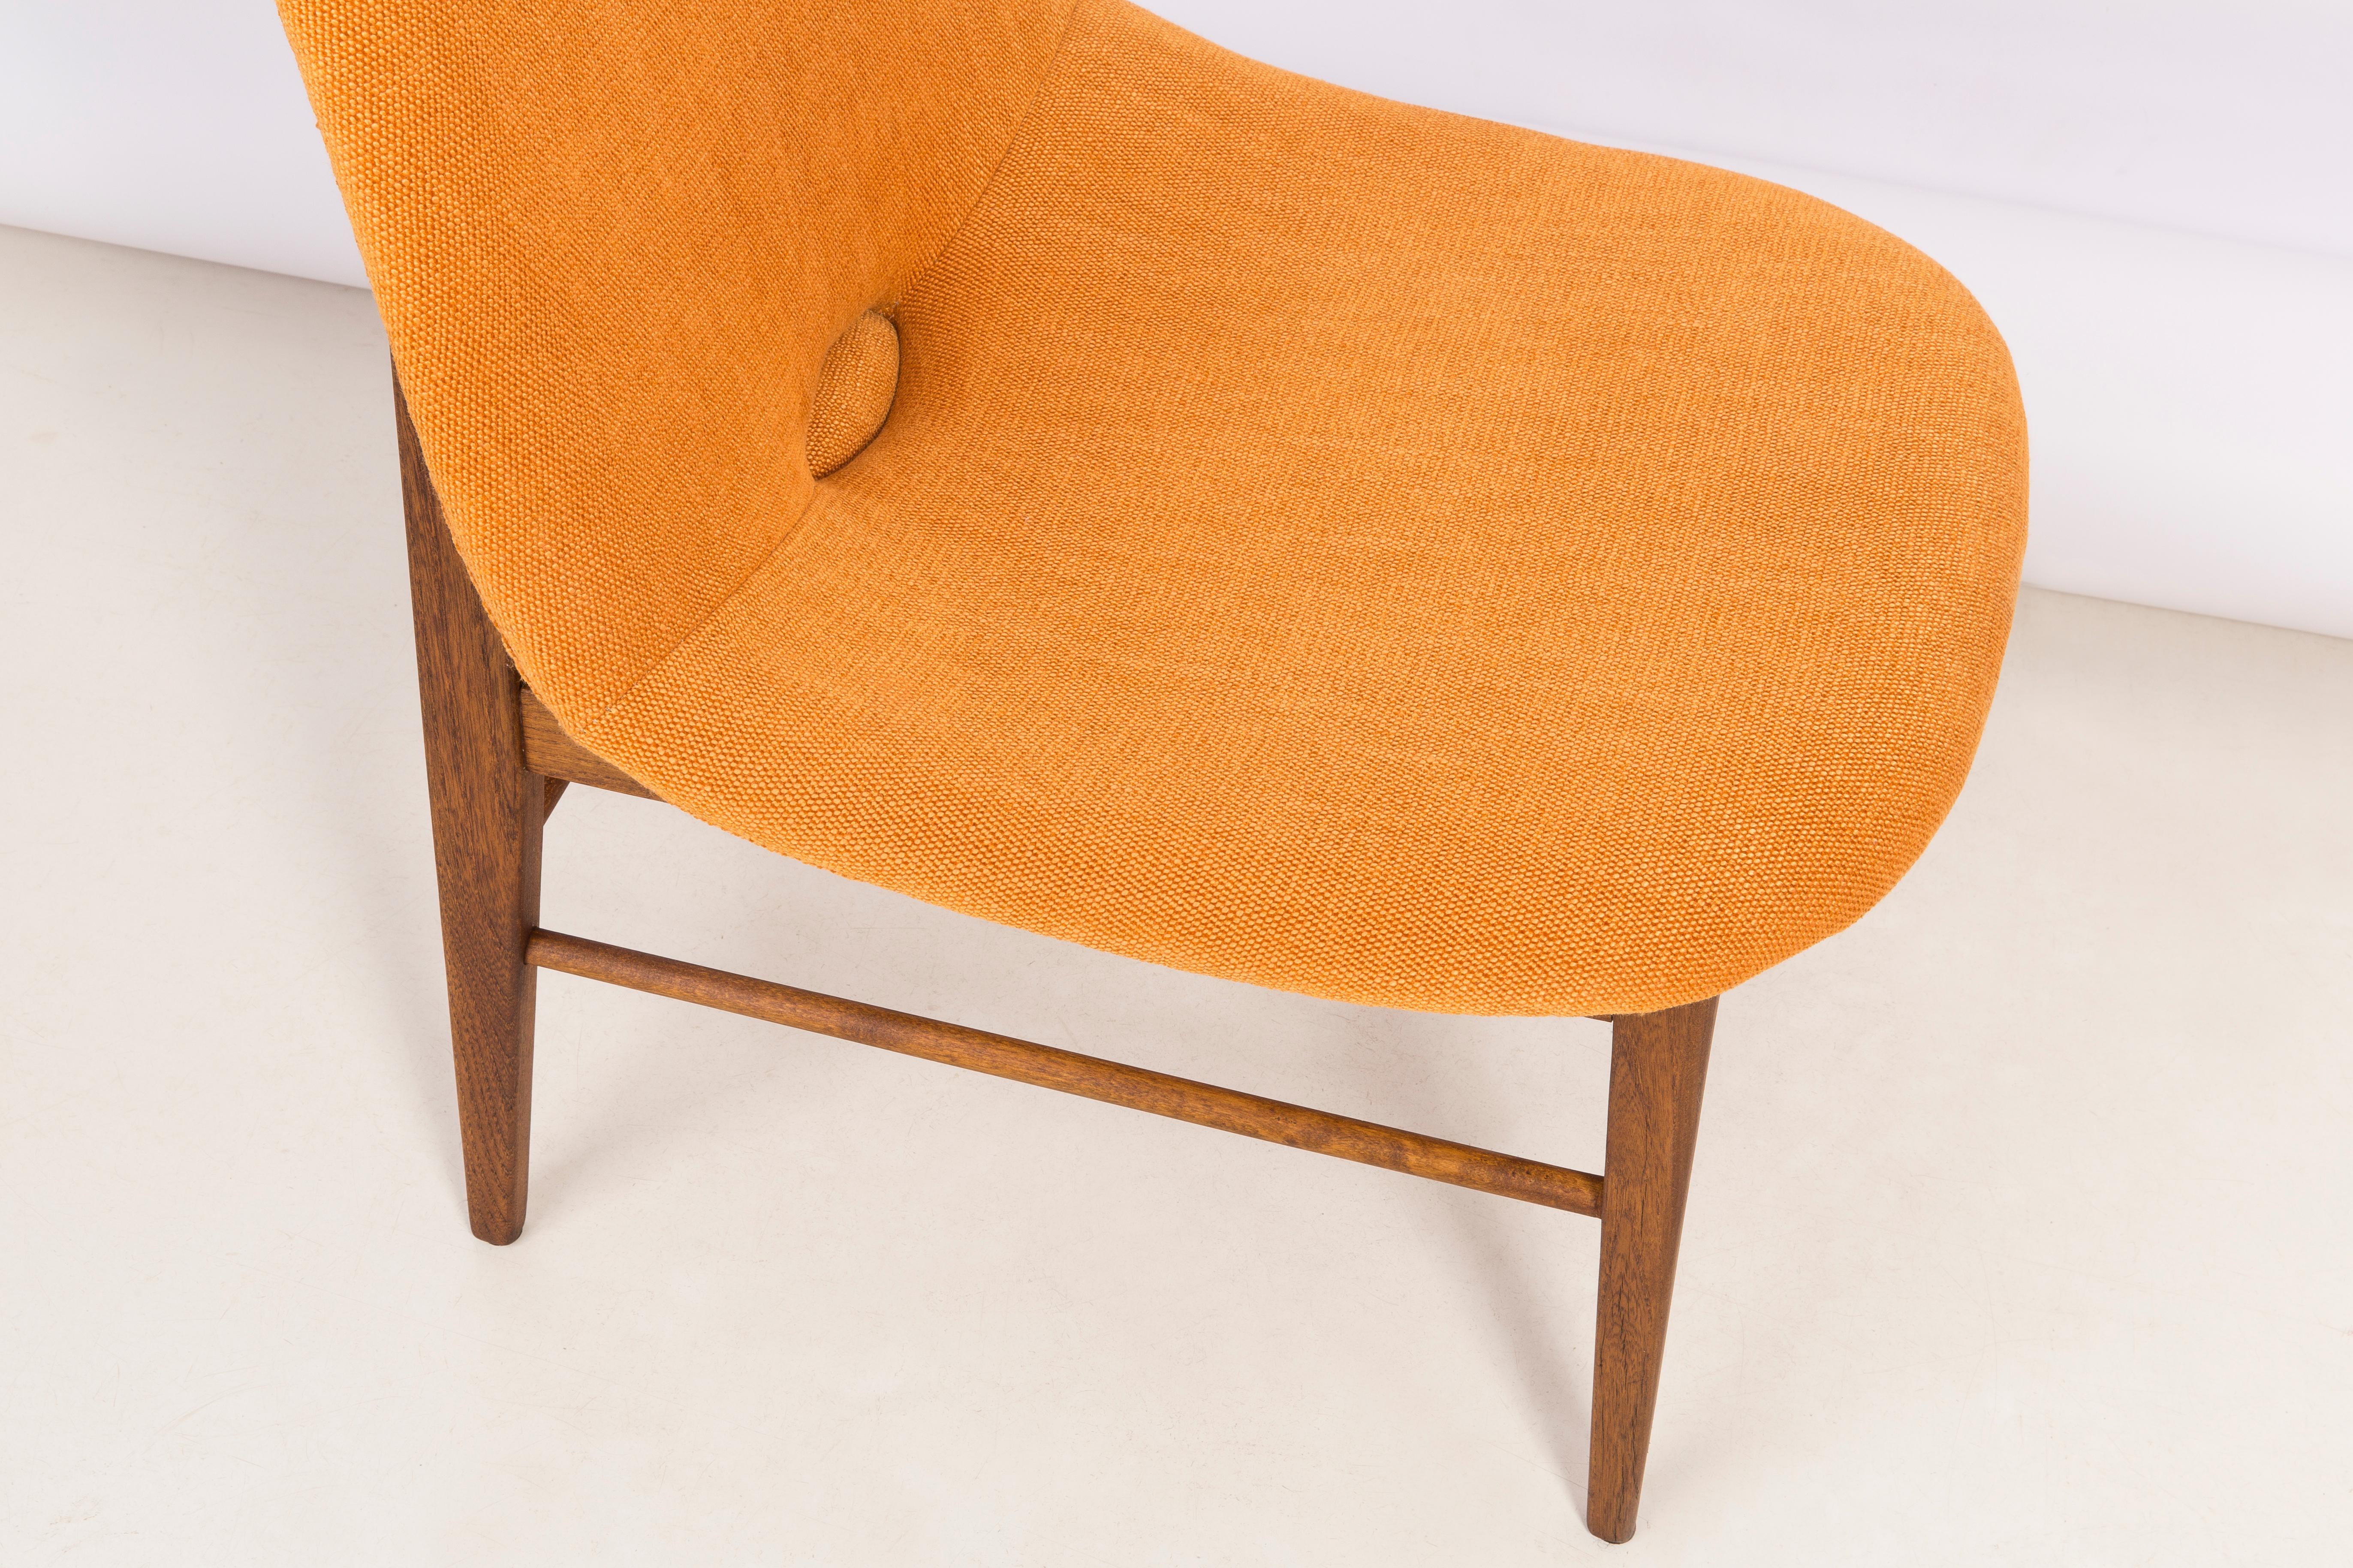 Rare 20th Century Orange Shell Chair, H.Lachert, 1960s For Sale 2